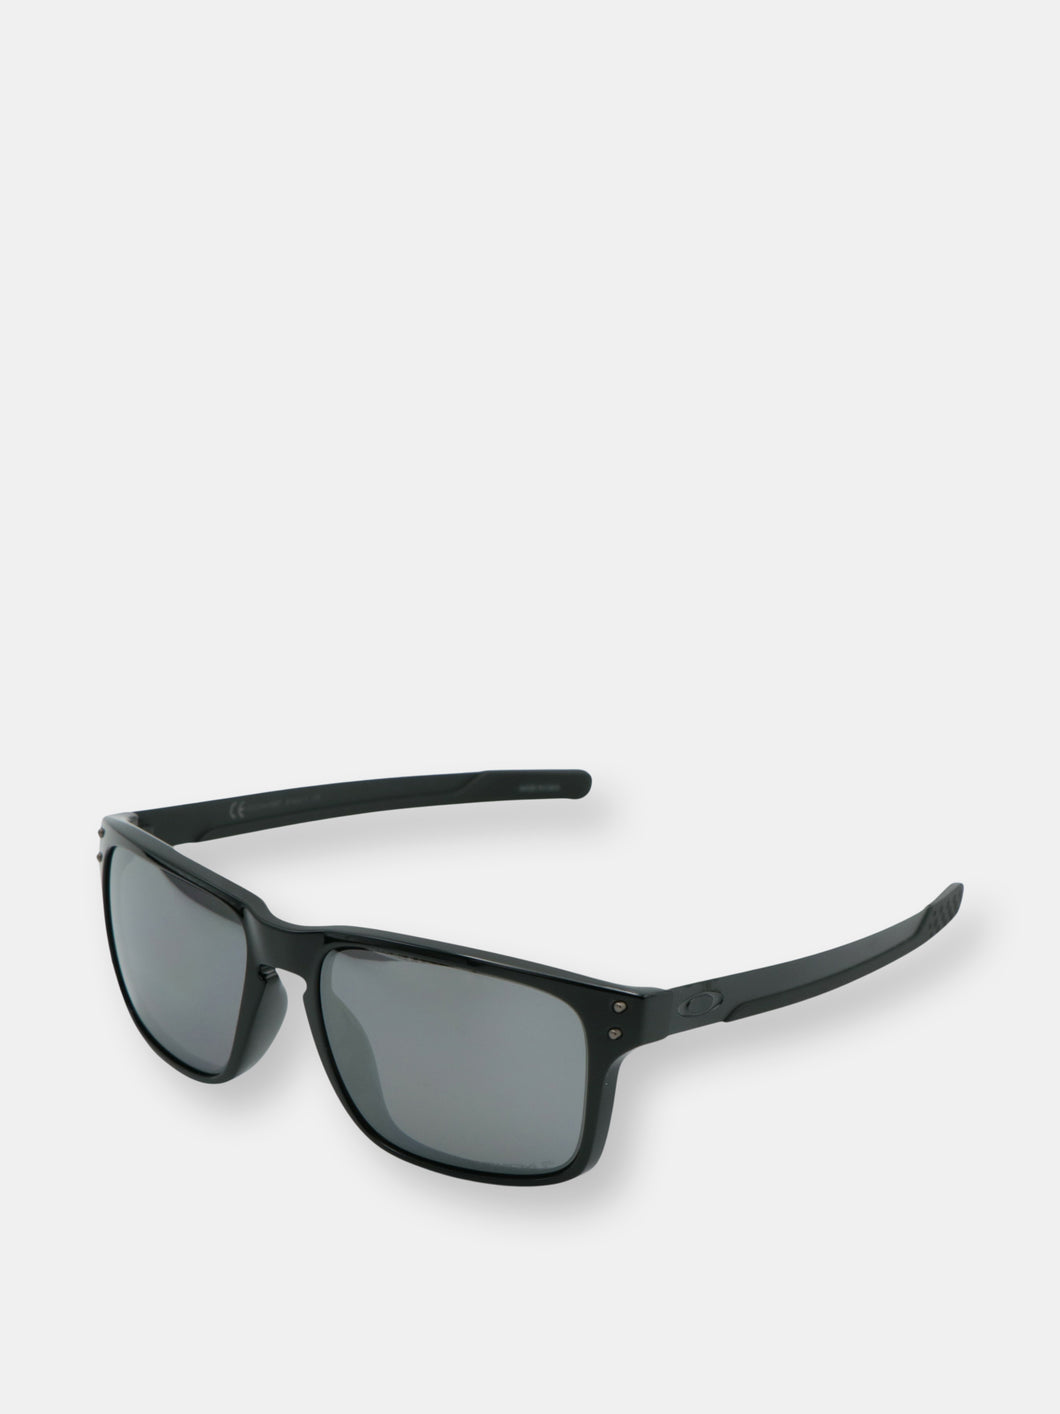 Oakley Men's Holbrook Mix Sunglasses